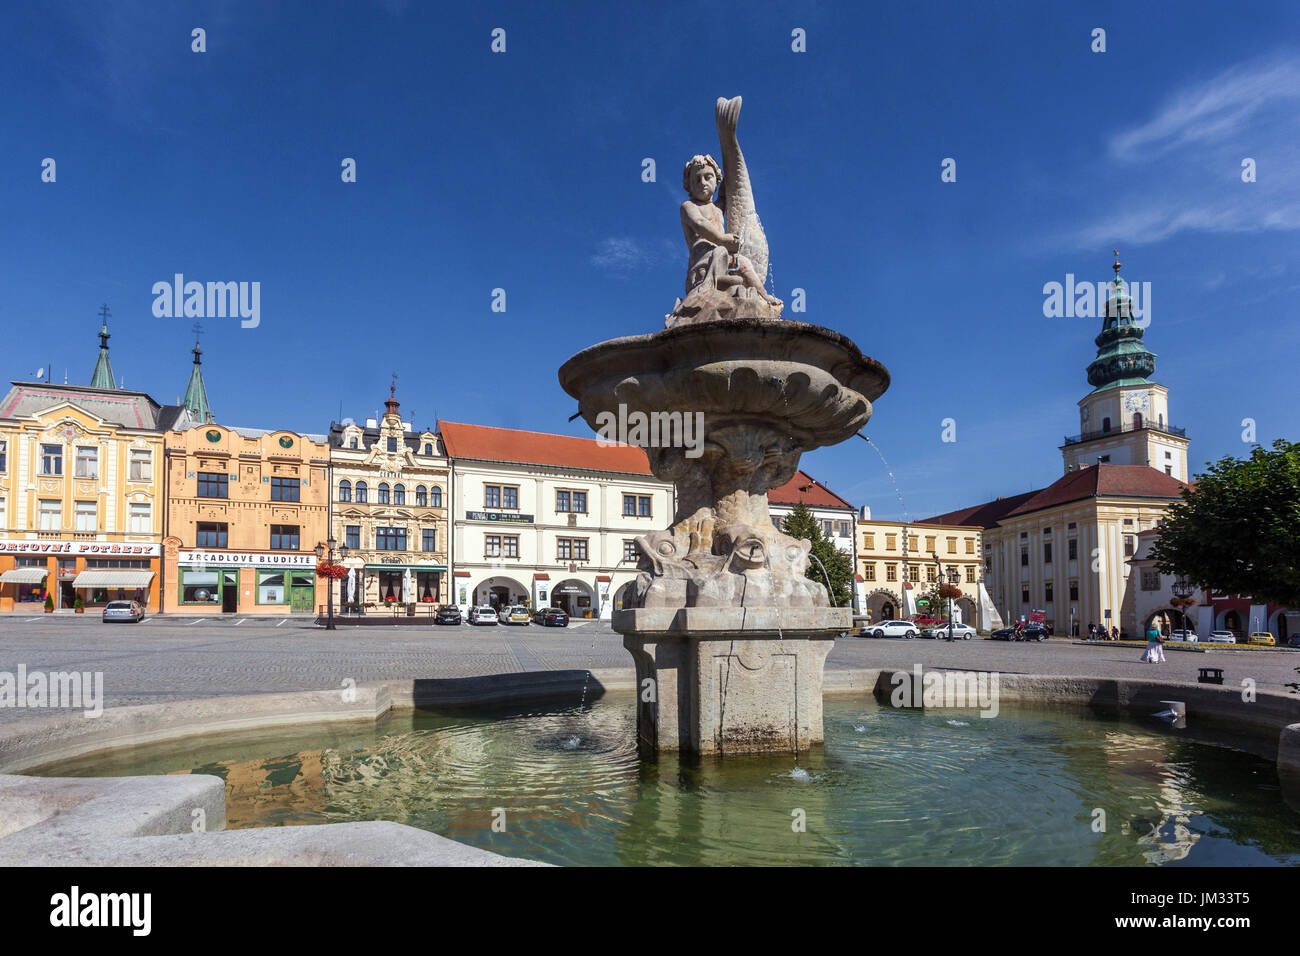 Main square Kromeriz Old Town with baroque fountain Kromeriz Archbishop palace in the background, Kromeriz Czech Republic town scenery Stock Photo